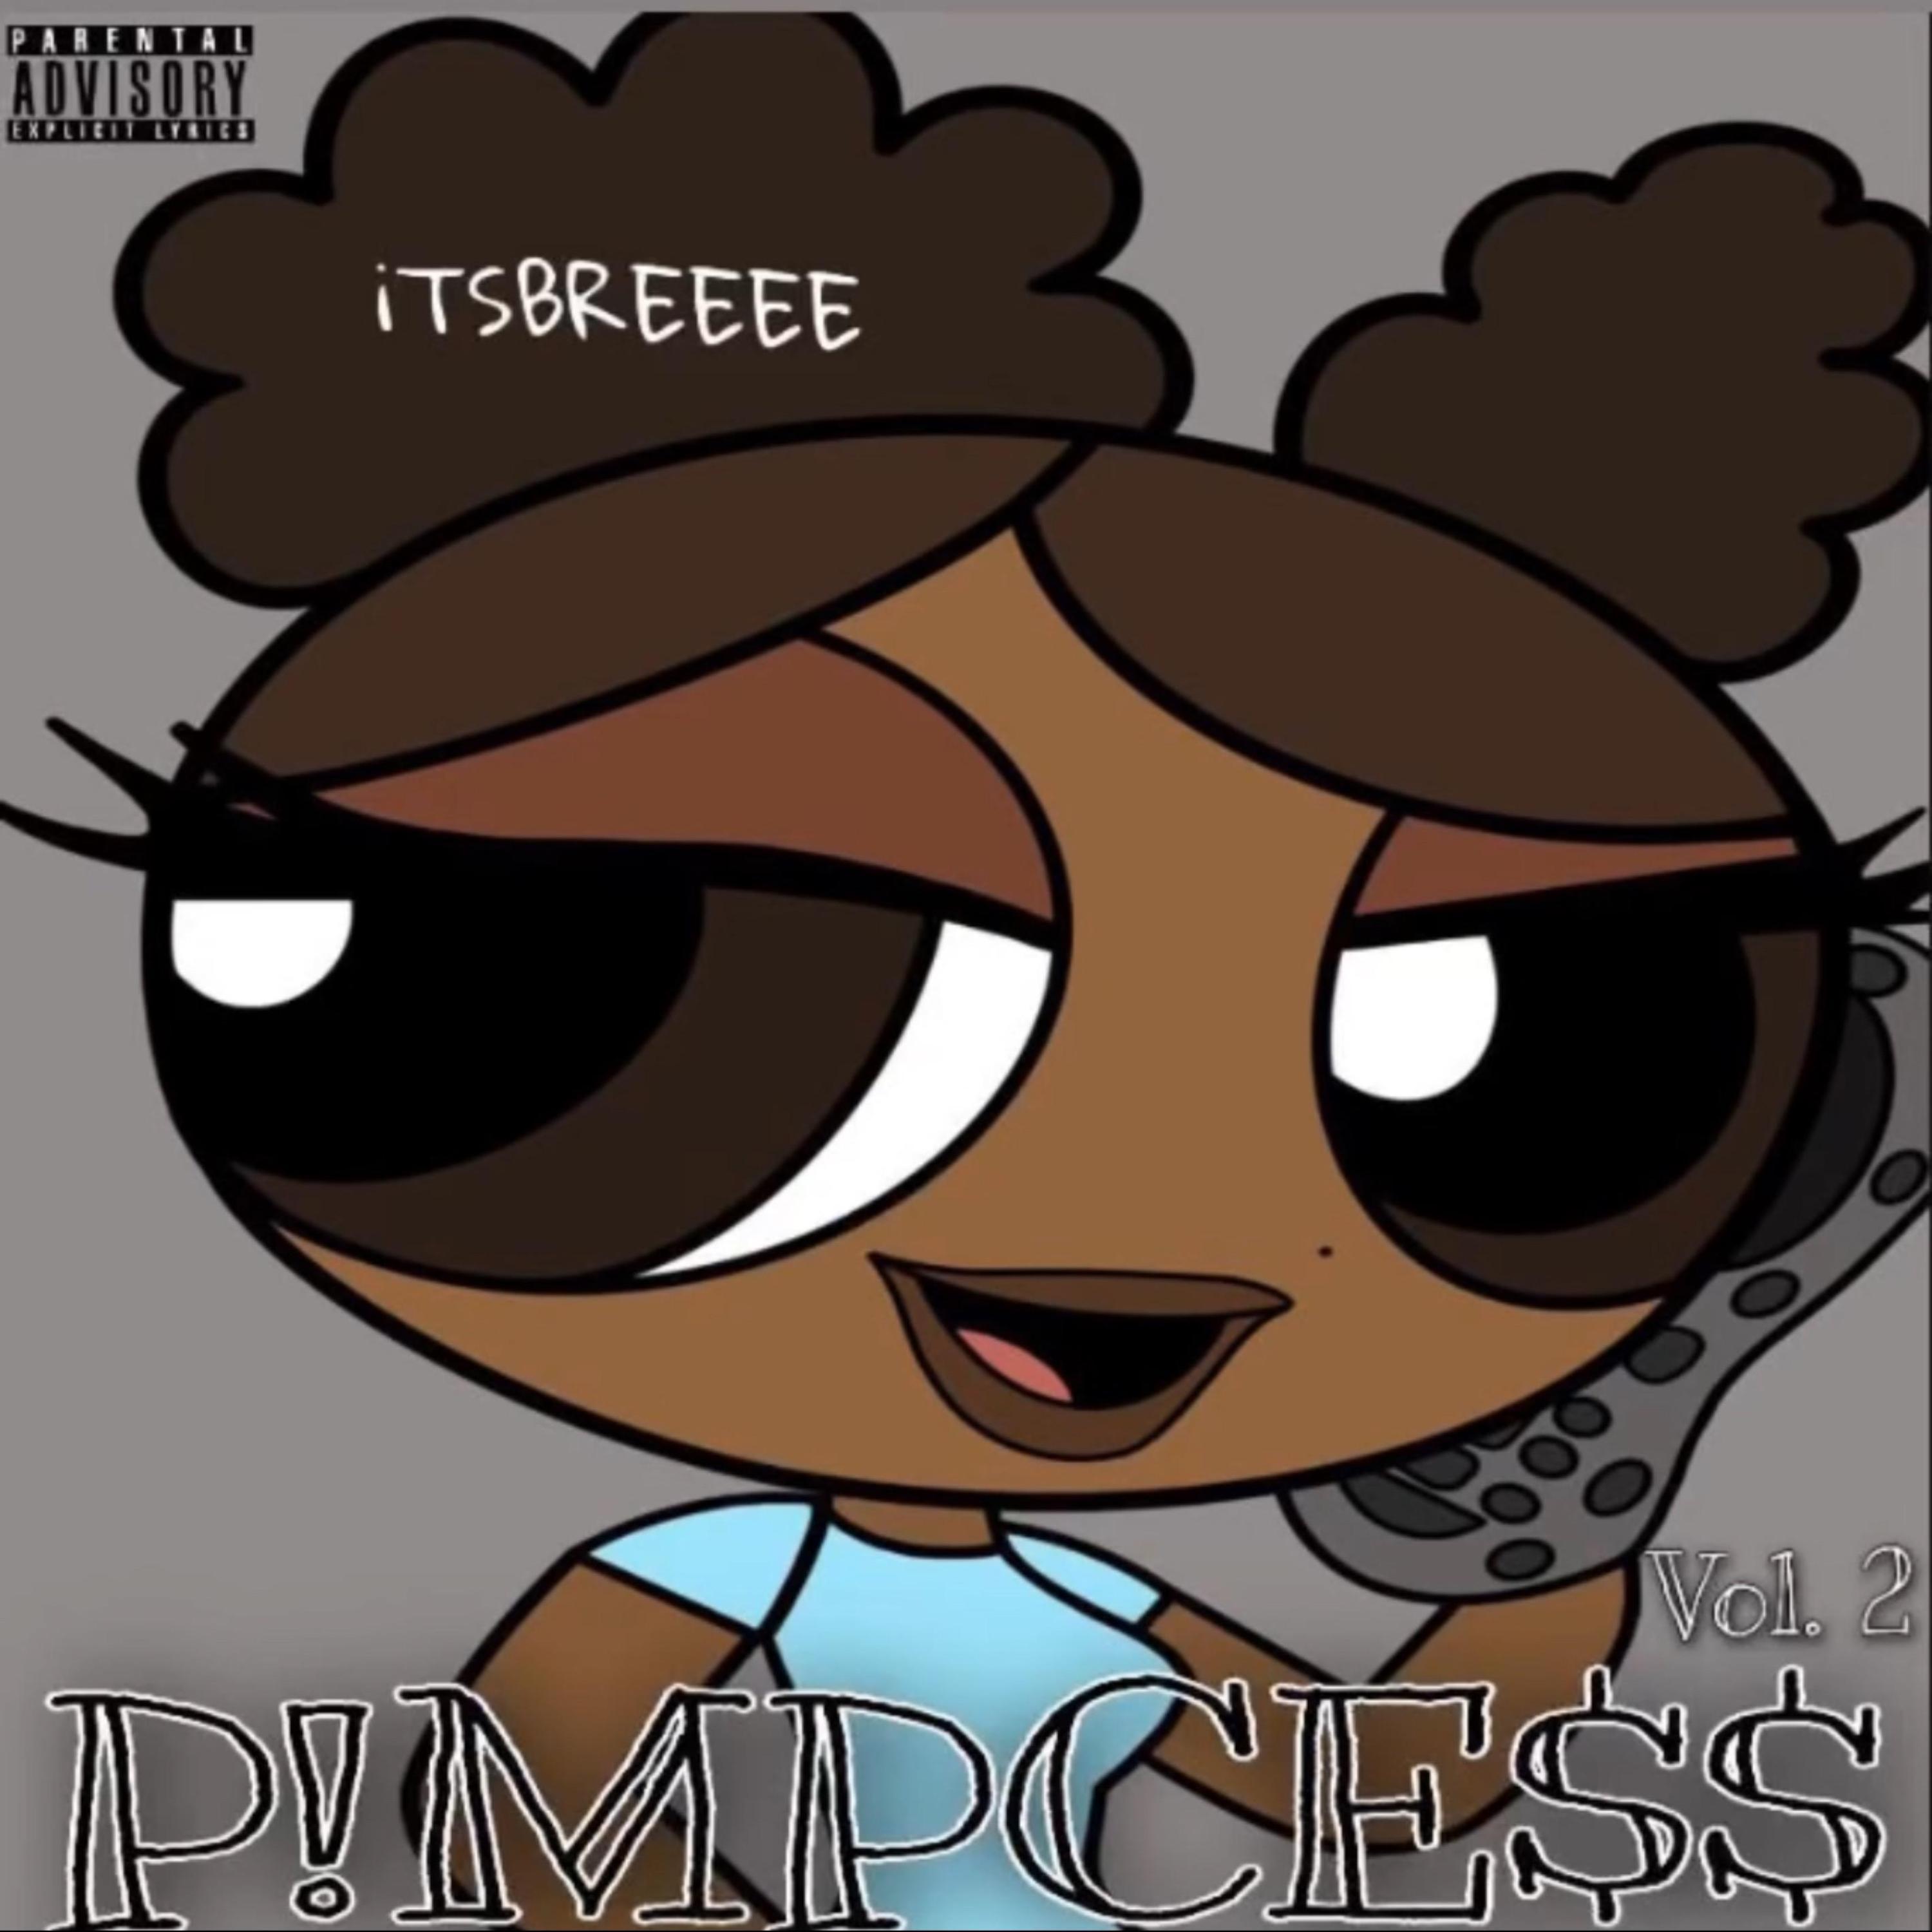 ItsBreeee - Where Dem Niggas